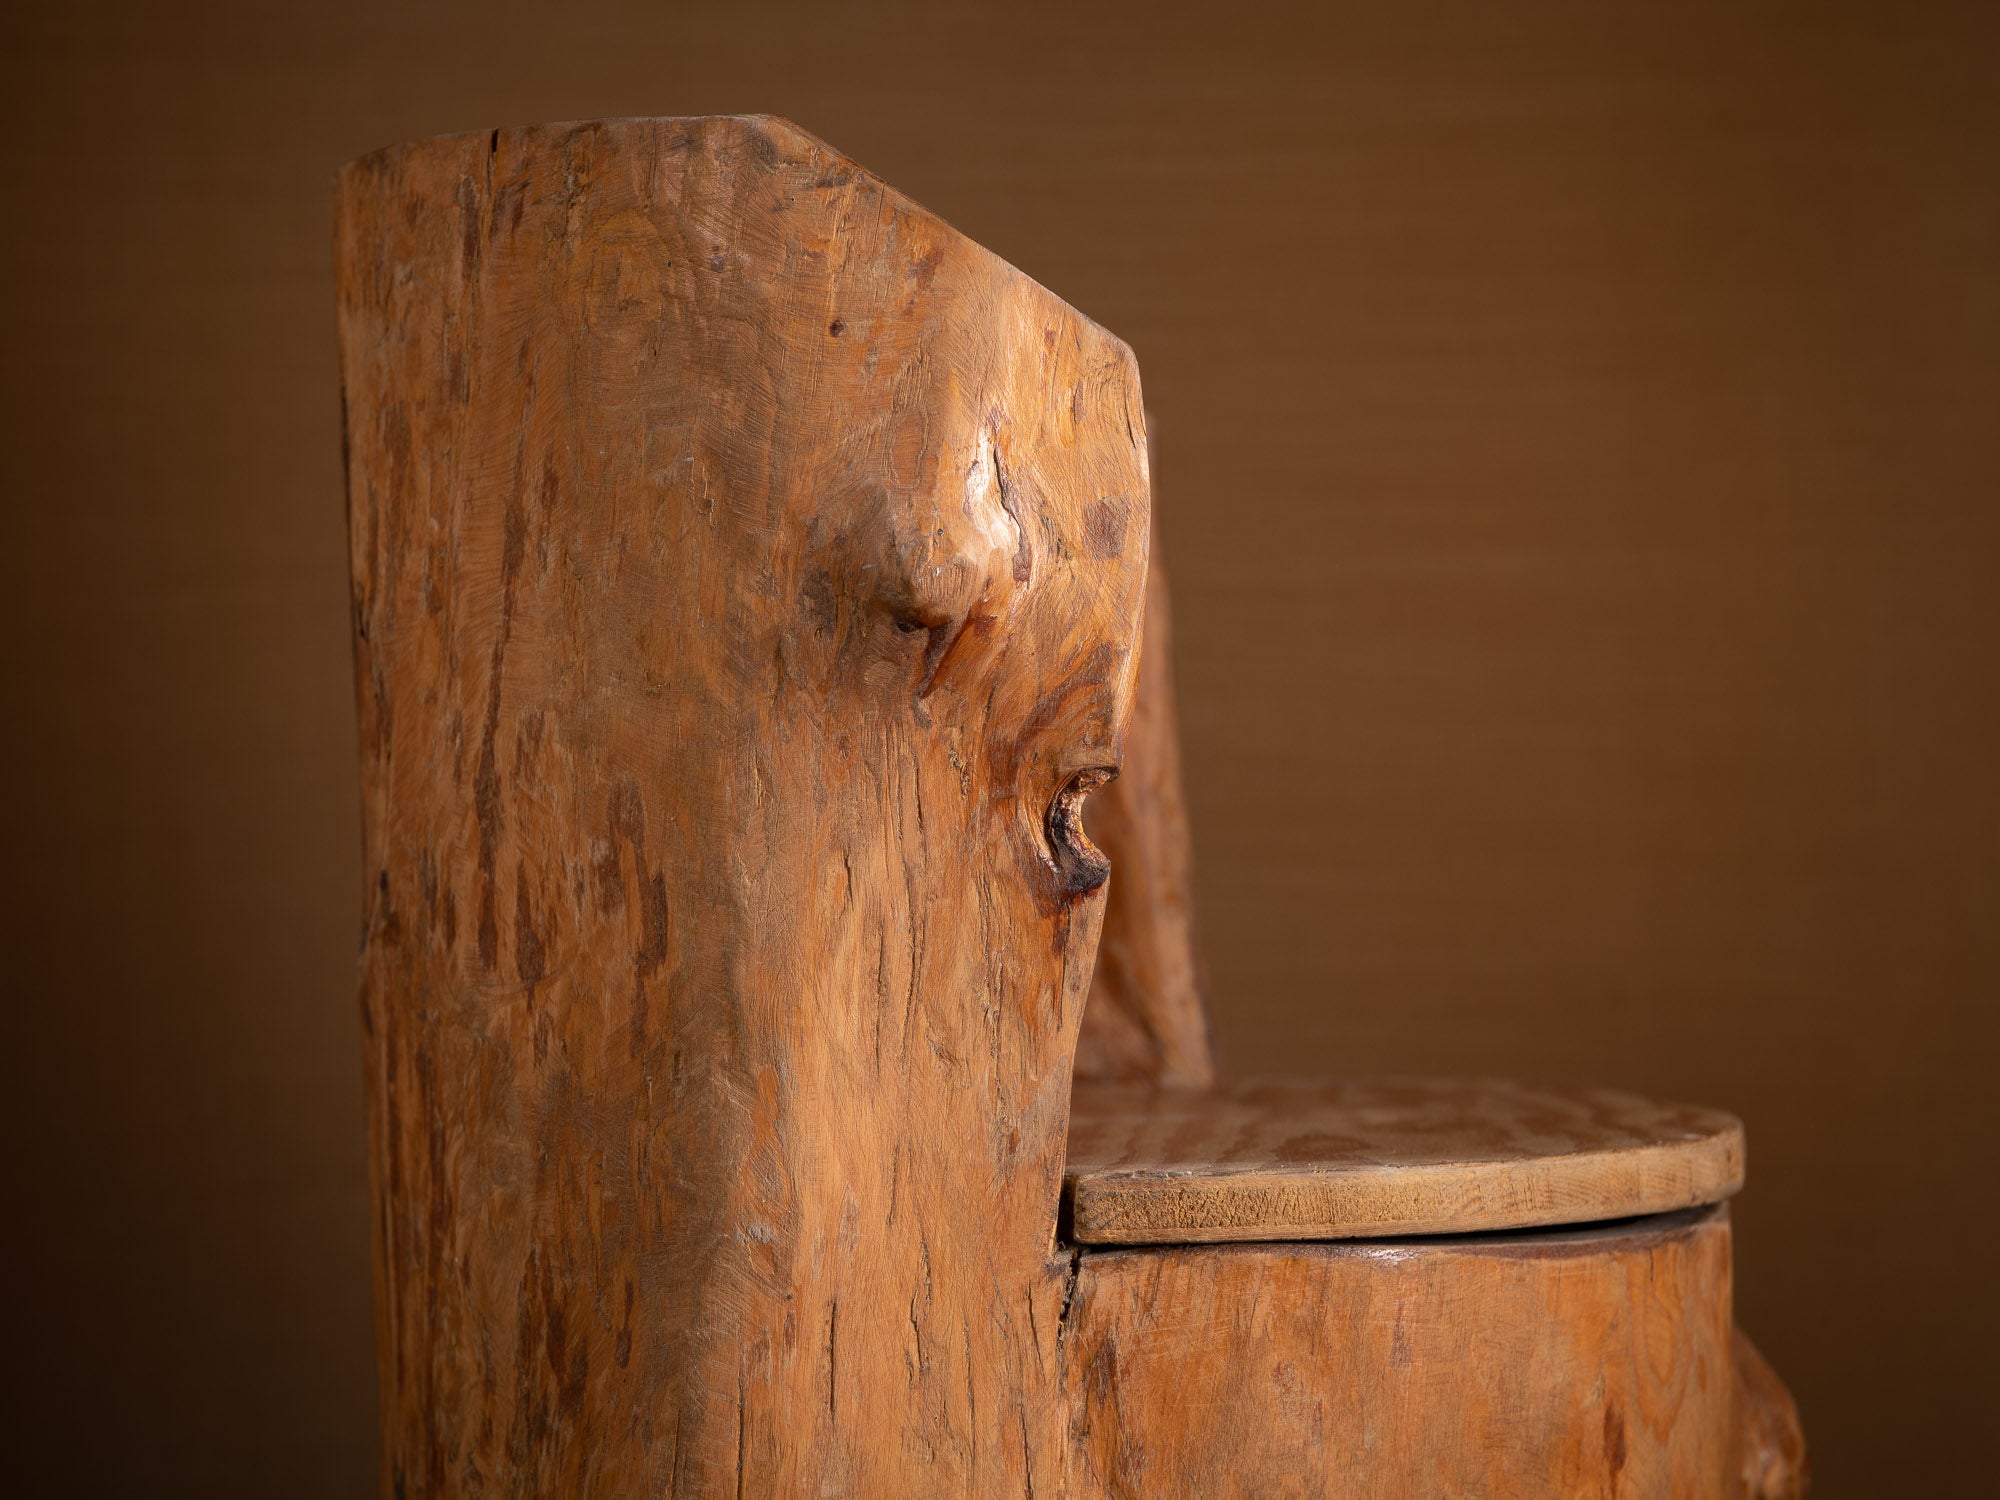 Fauteuil monoxyle paysan Kubbstol, Suède (début du XXe siècle)..Kubbstol, Peasant carved wooden chair, Sweden (early 20th century)